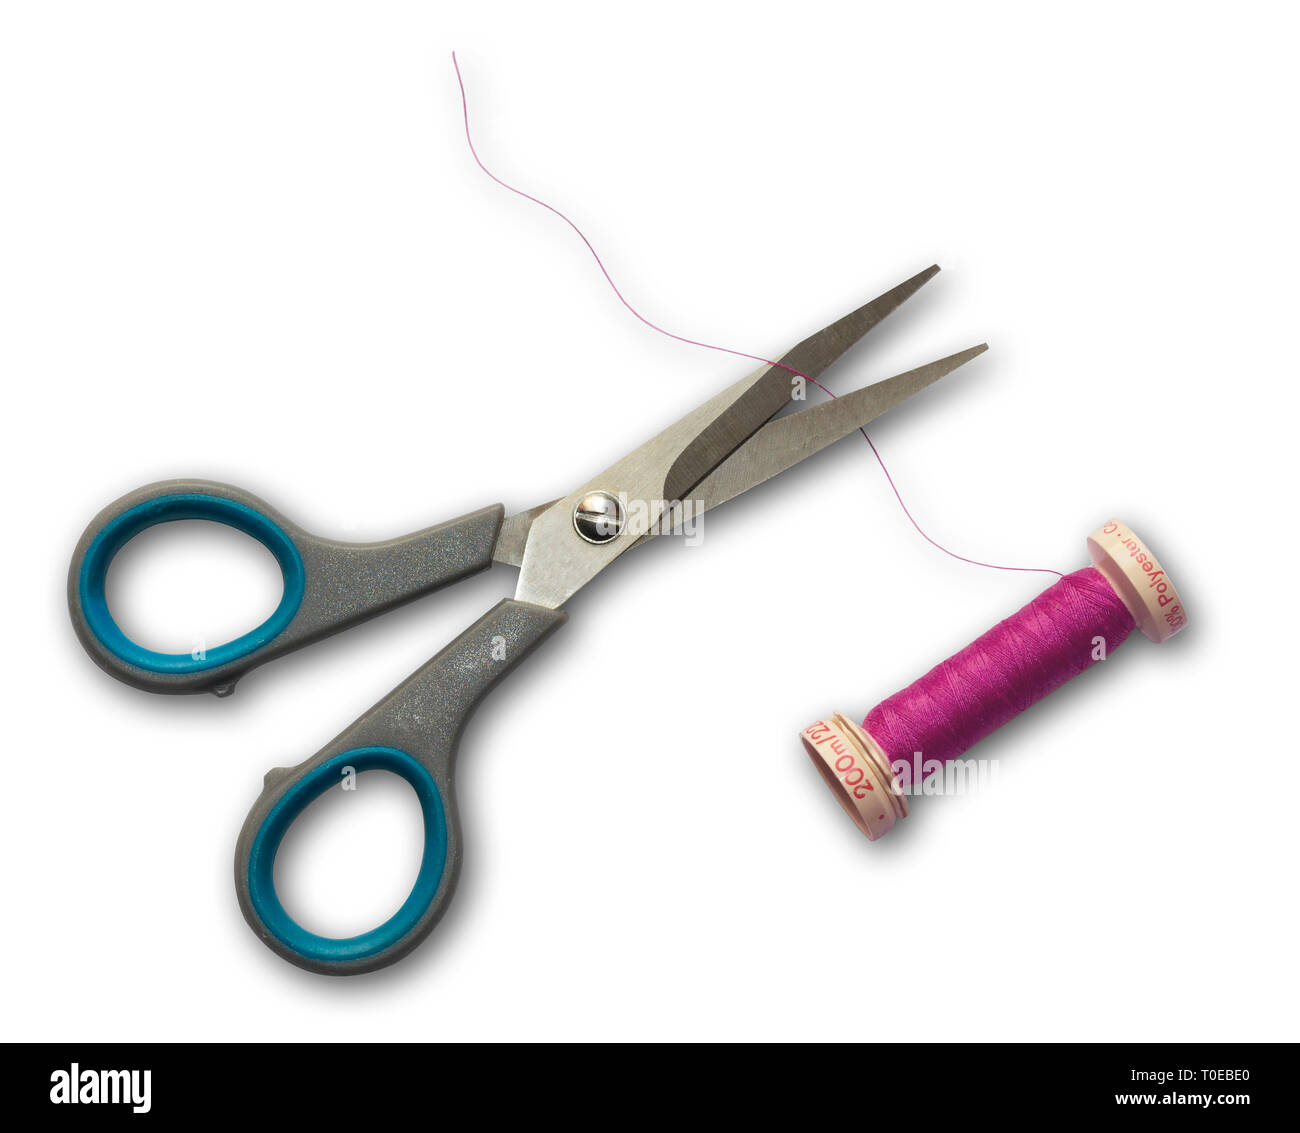 Sewing scissors cutting thread Stock Photo